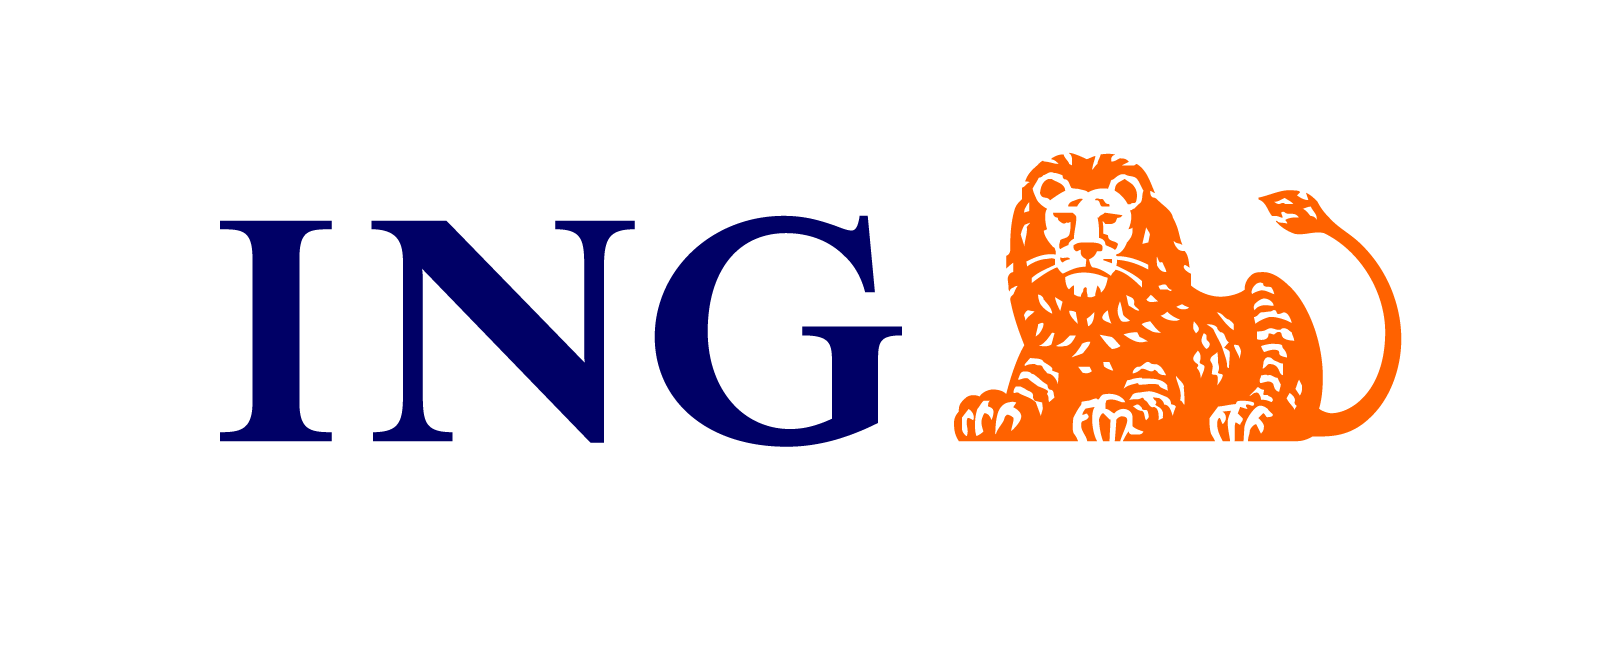 Logo Agro Bank Png Hdpng.com 1621 - Agro Bank, Transparent background PNG HD thumbnail